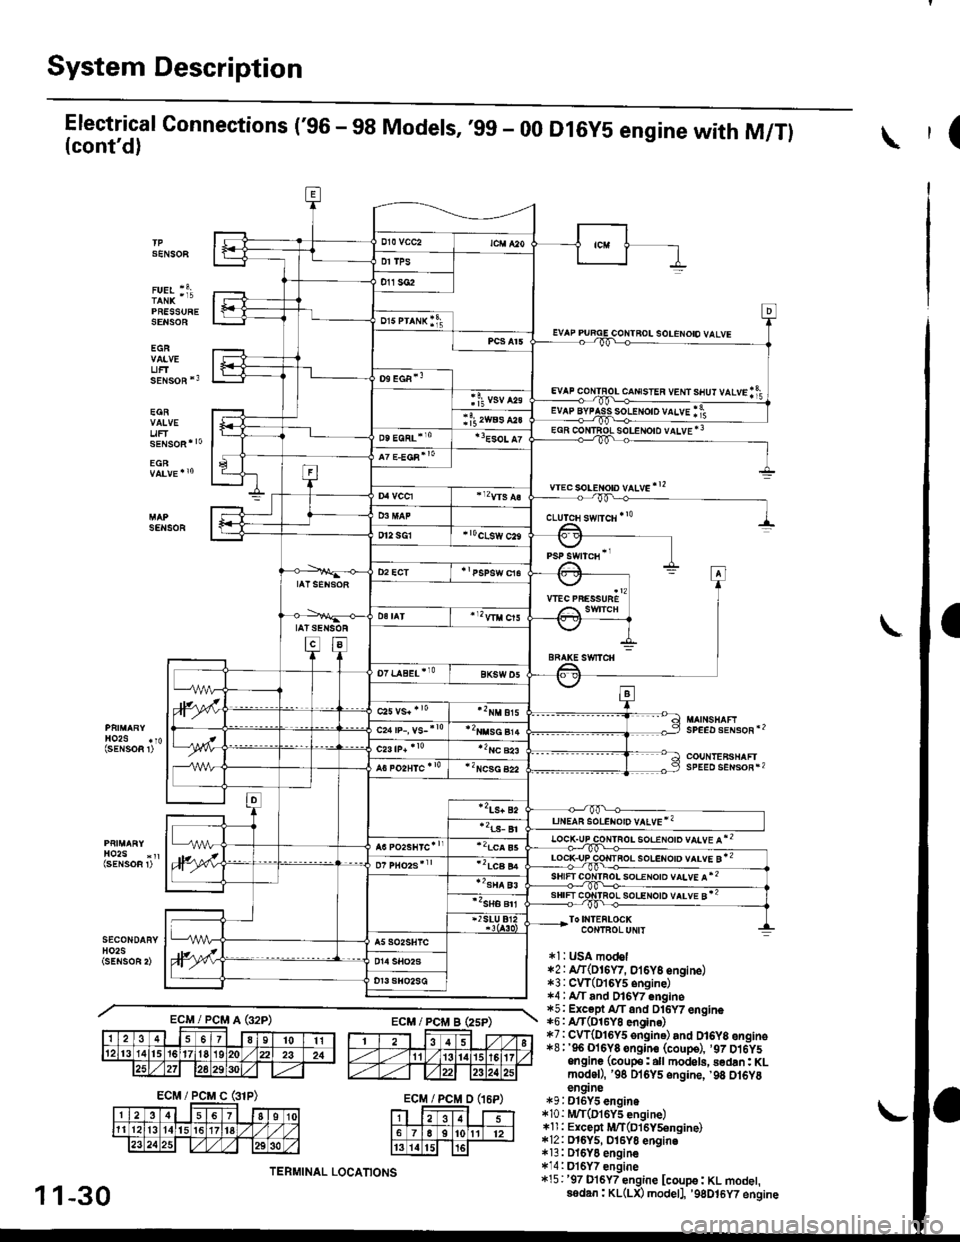 HONDA CIVIC 1997 6.G Owners Guide System Description
Electrical Connections (96 - 98 Models, ,99 - 00(contd)
PRESSURESENSOE
EGR
UFTsENsoR *3
EGR
uF
D16Y5 engine with M/Tl(
SENSOF
solENoto vALvE *3
wec soLeton vltve!2
SENSOR
SPEED s